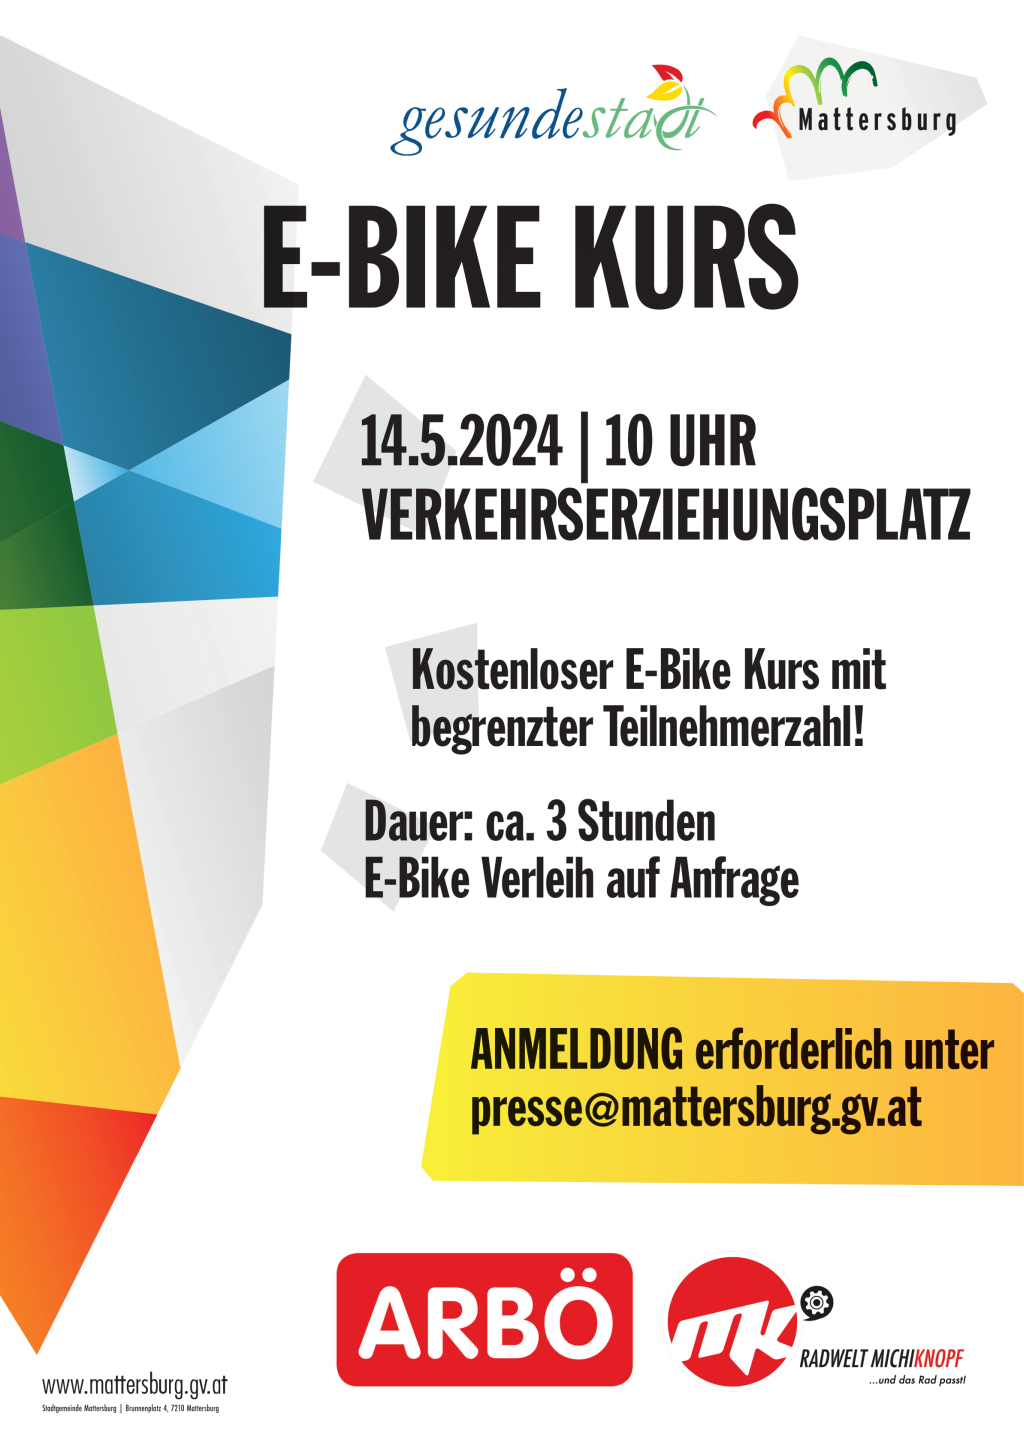 E-Bike Kurs